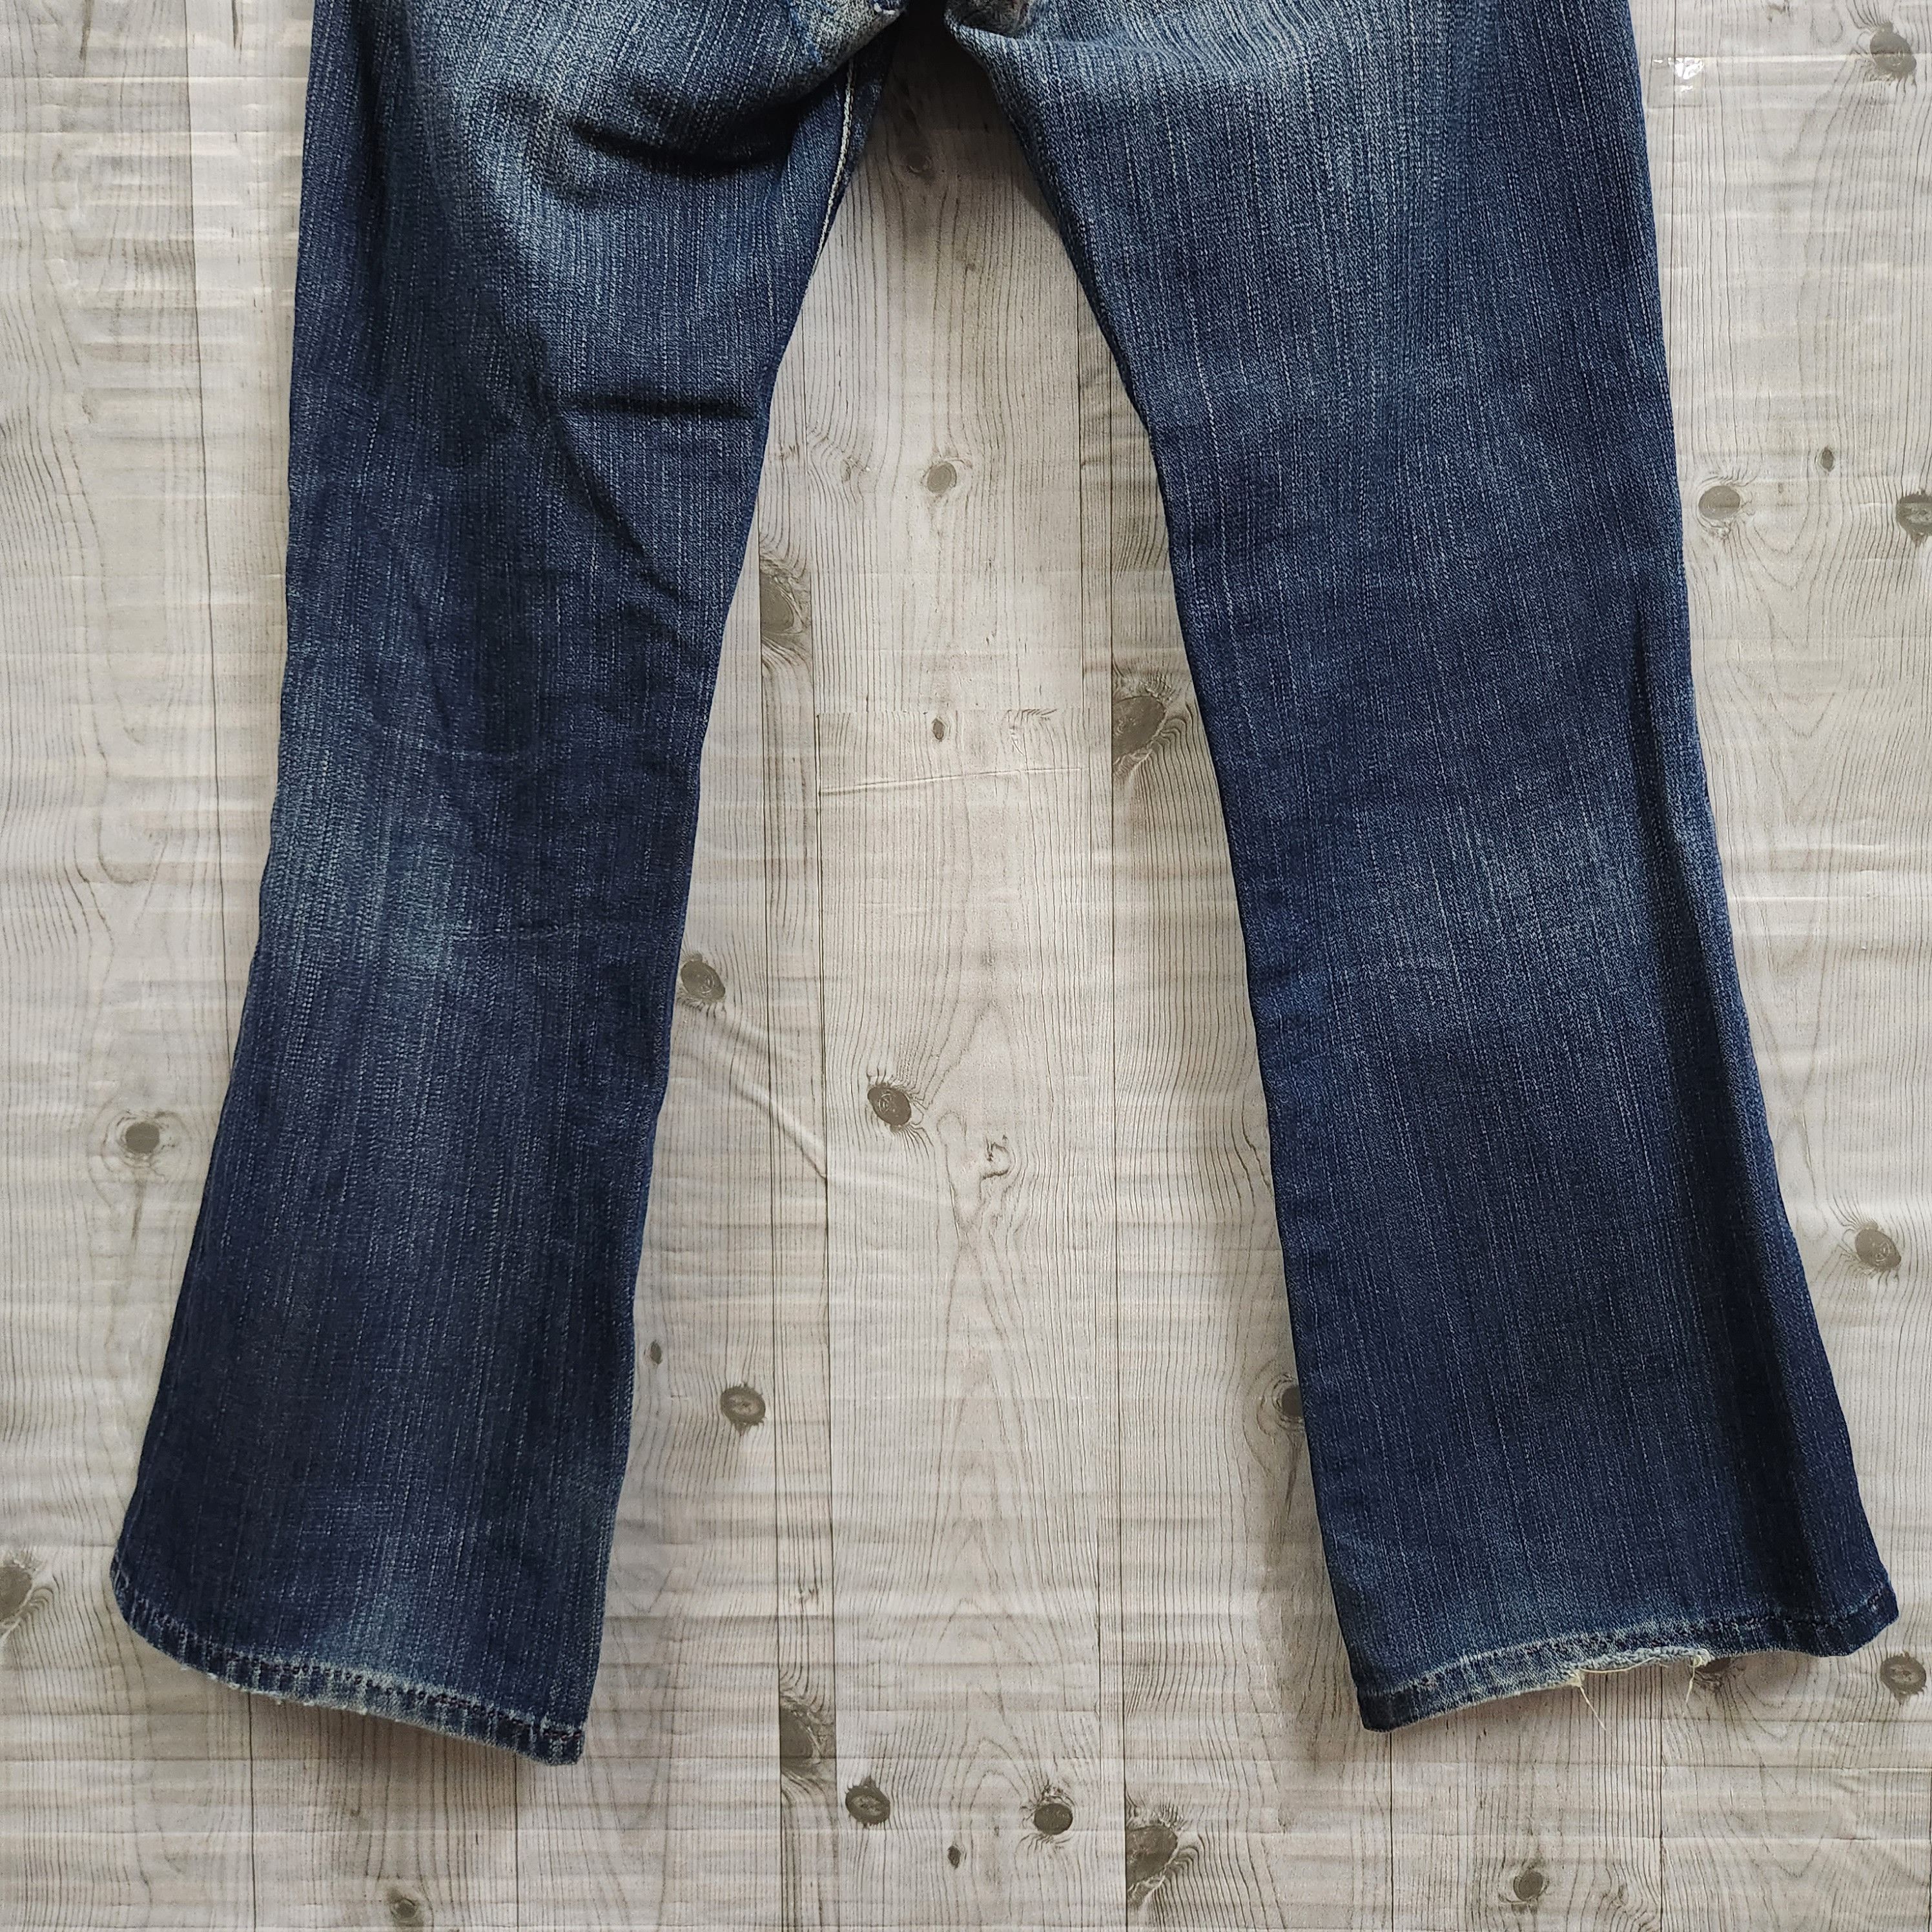 Vintage Levis 517 Premium Denim Jeans Year 2006 - 9